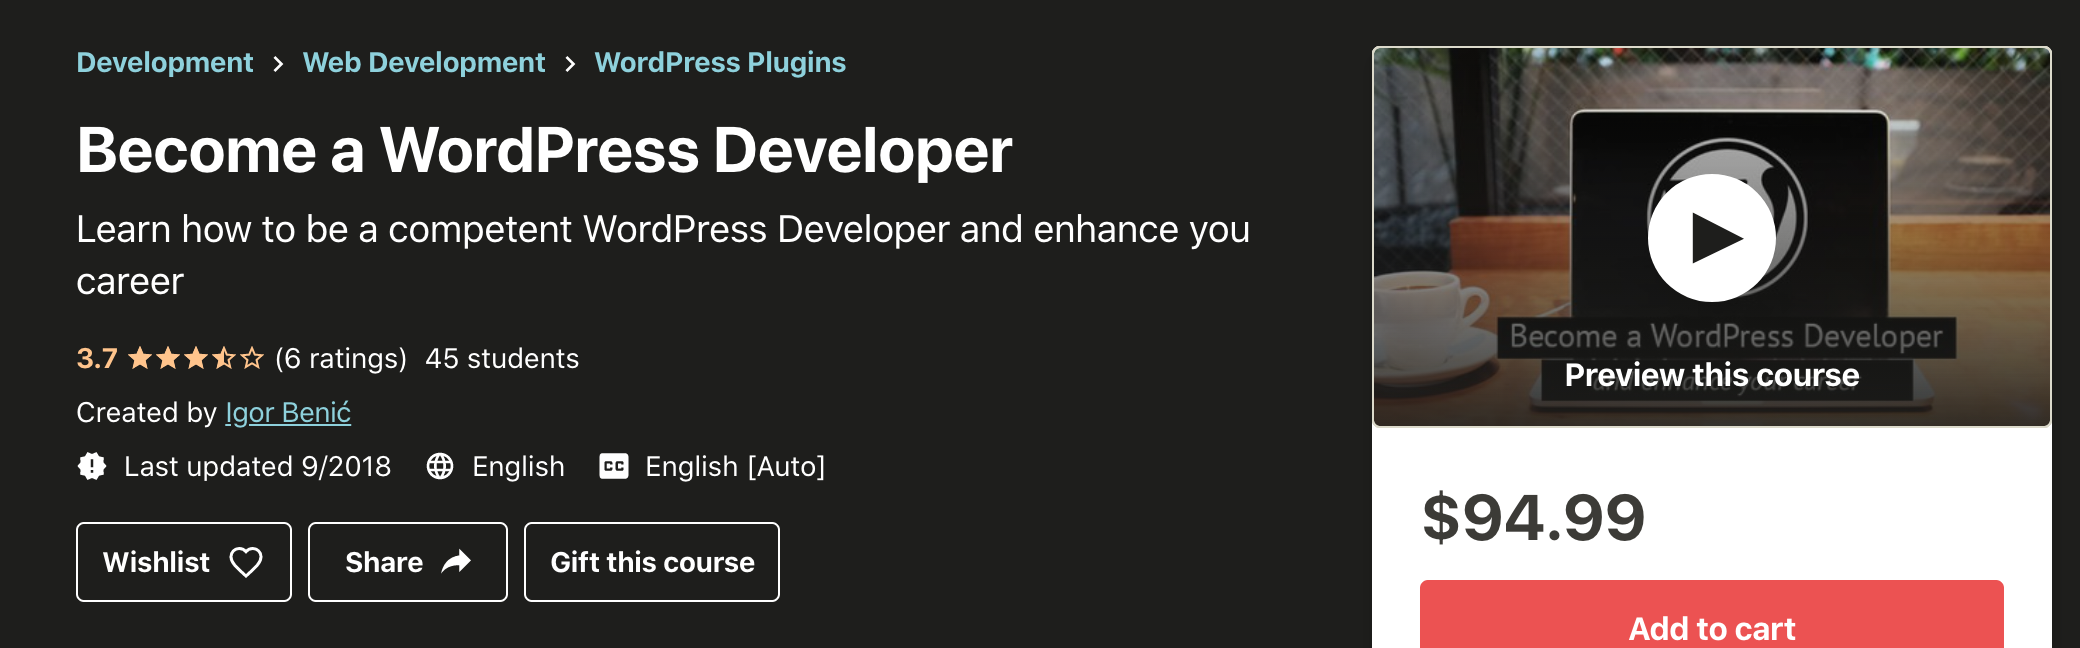 Igor Benic WordPress Plugin Development Course